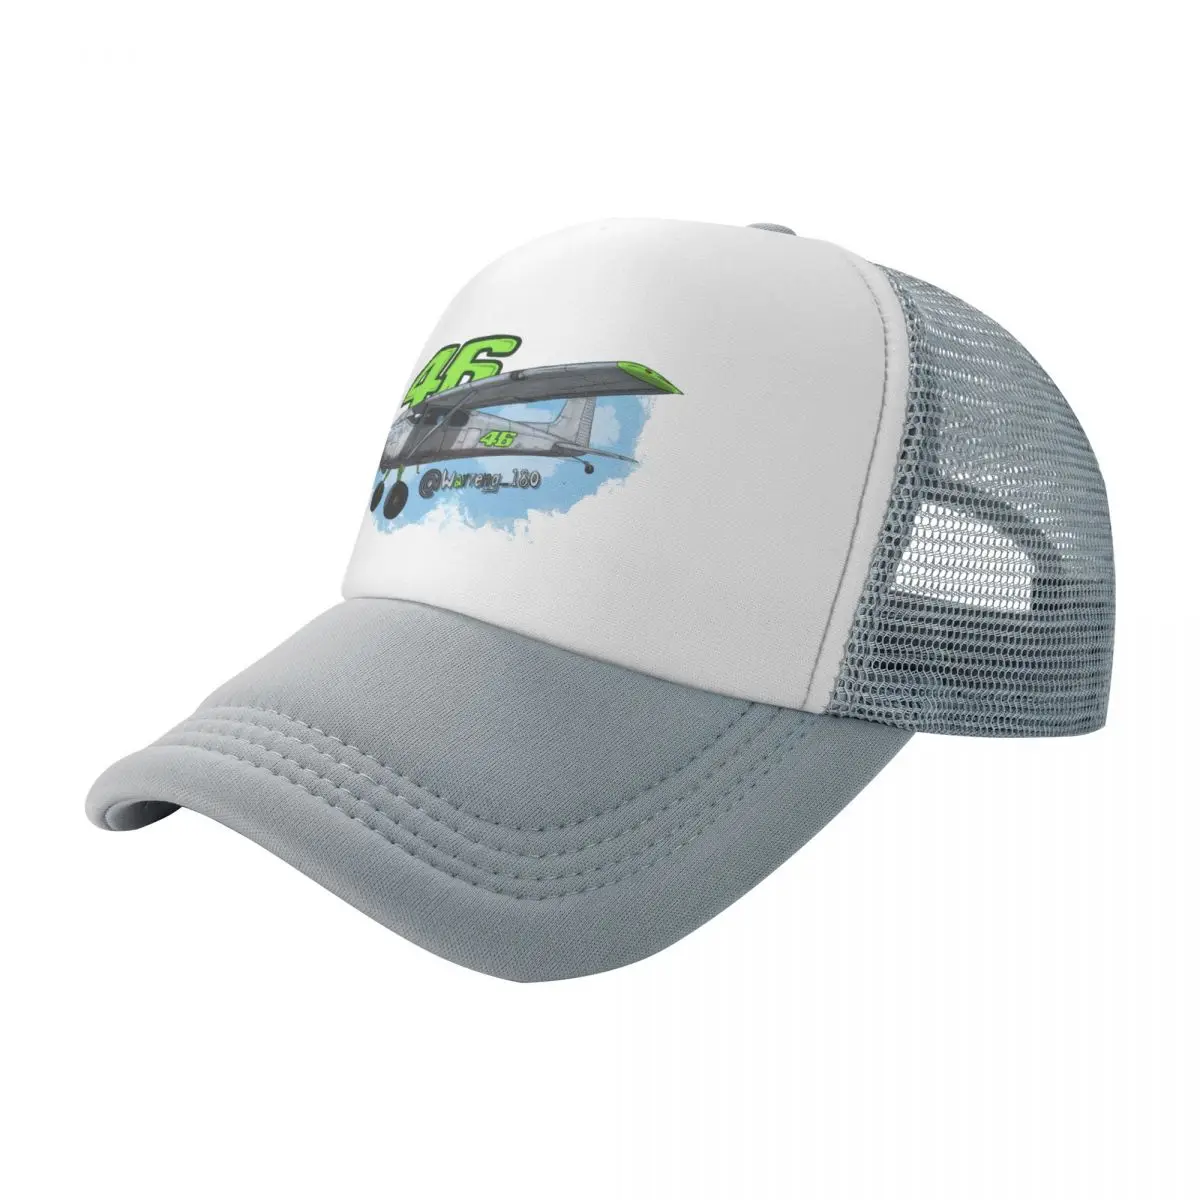 Warreng_180 Бейсбольная кепка cessna 180 Stol, шляпы для вечеринок, брендовые мужские кепки, кепка для гольфа, кепка для мальчика, женская 1